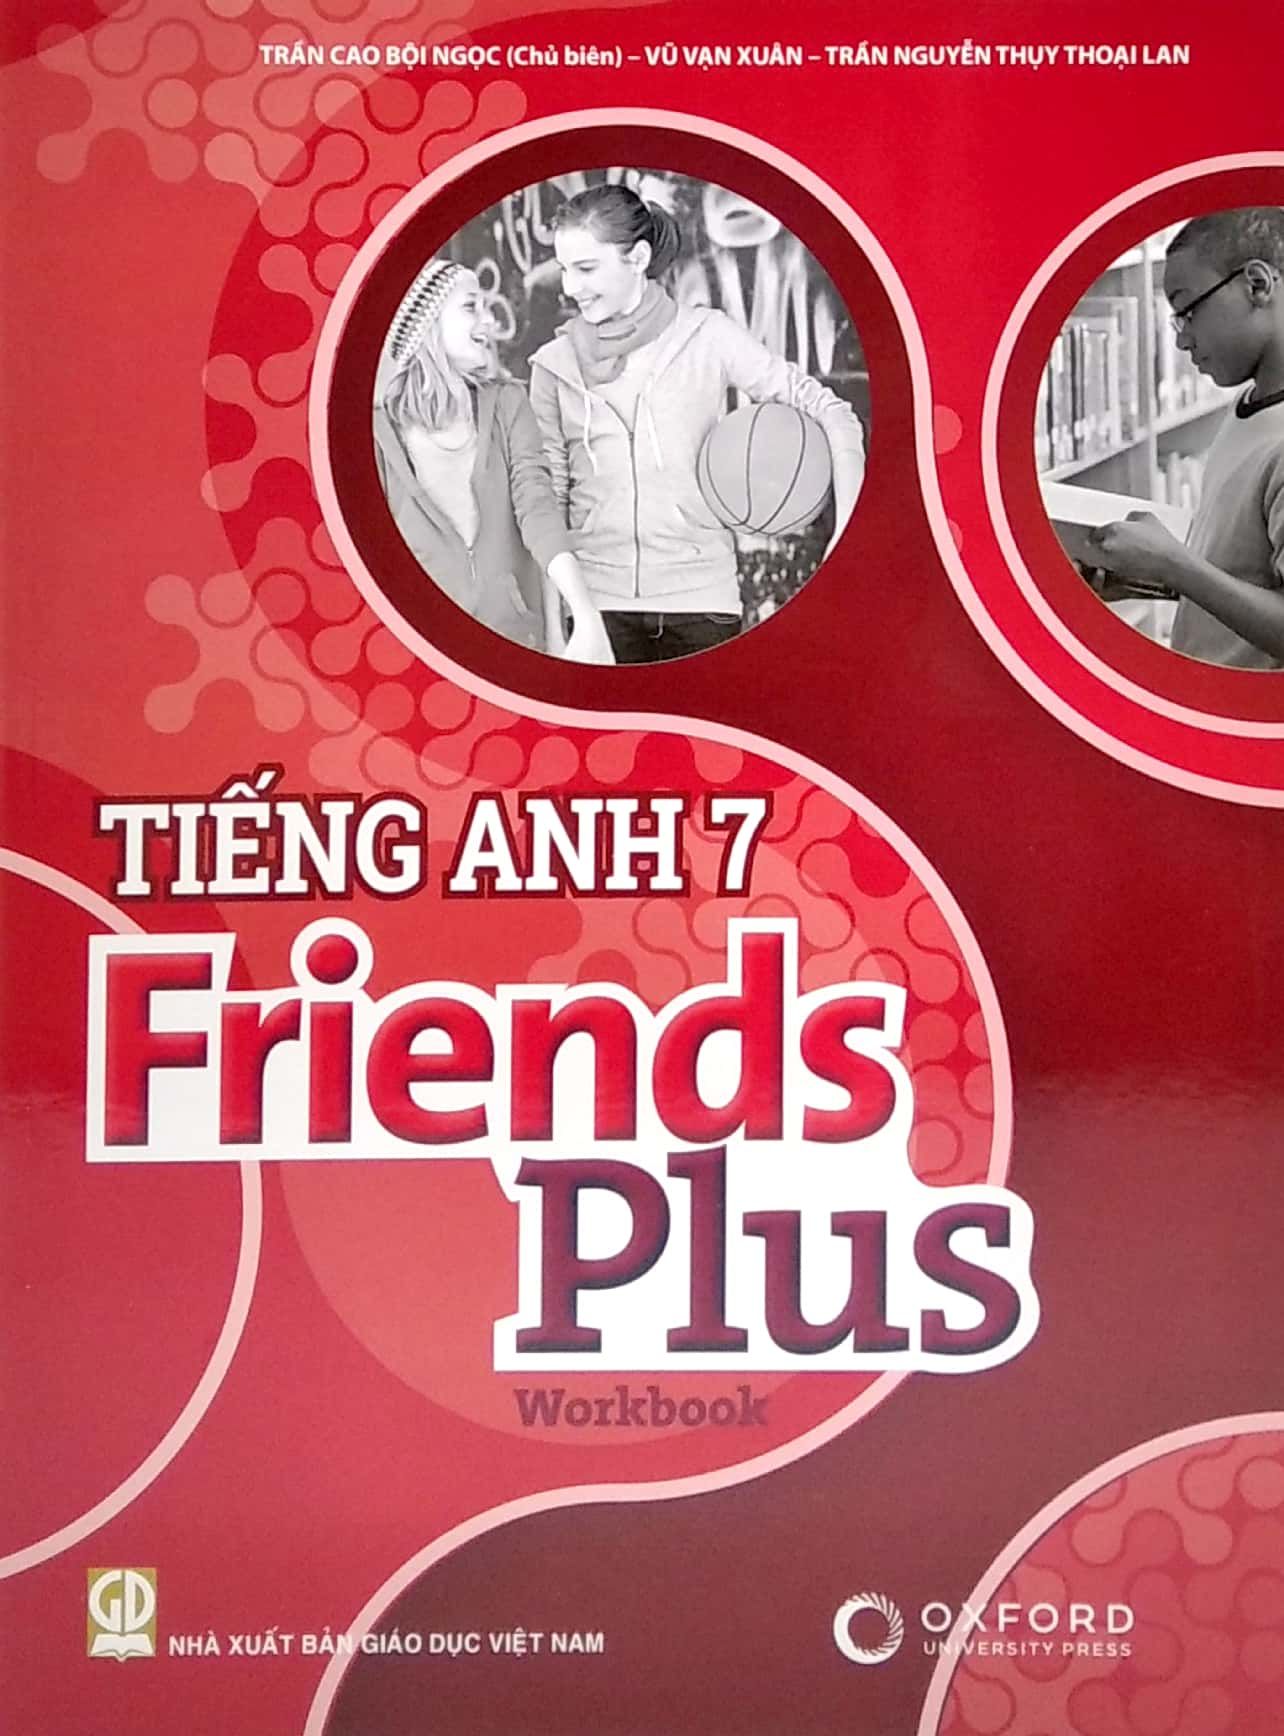  Tiếng Anh 7 Friends Plus - Workbook 